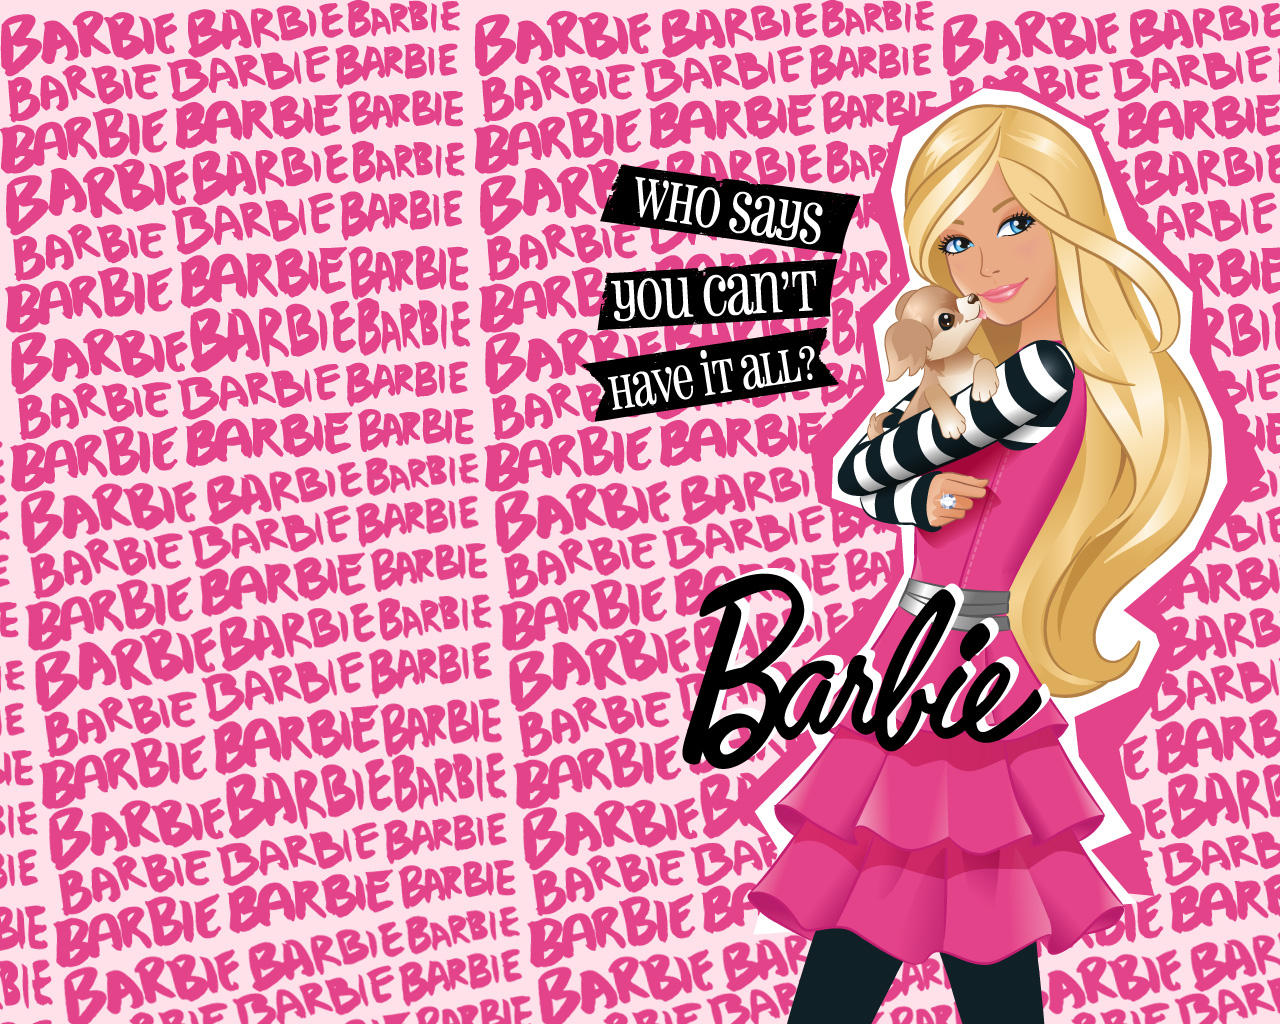 fond d'écran barbie,rose,dessin animé,texte,police de caractère,barbie